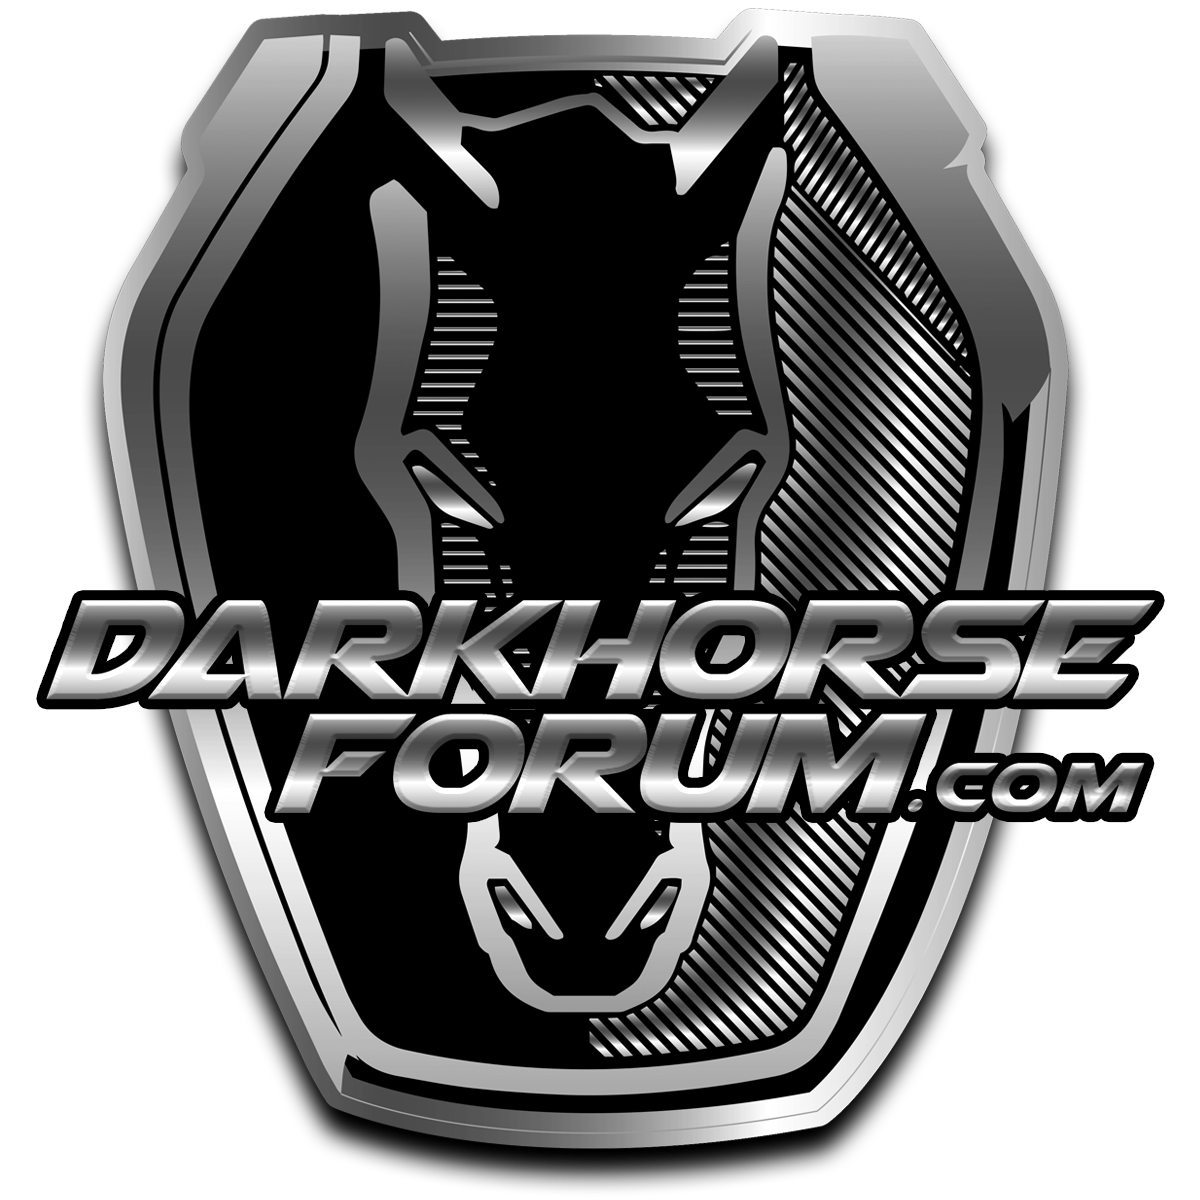 www.darkhorseforum.com